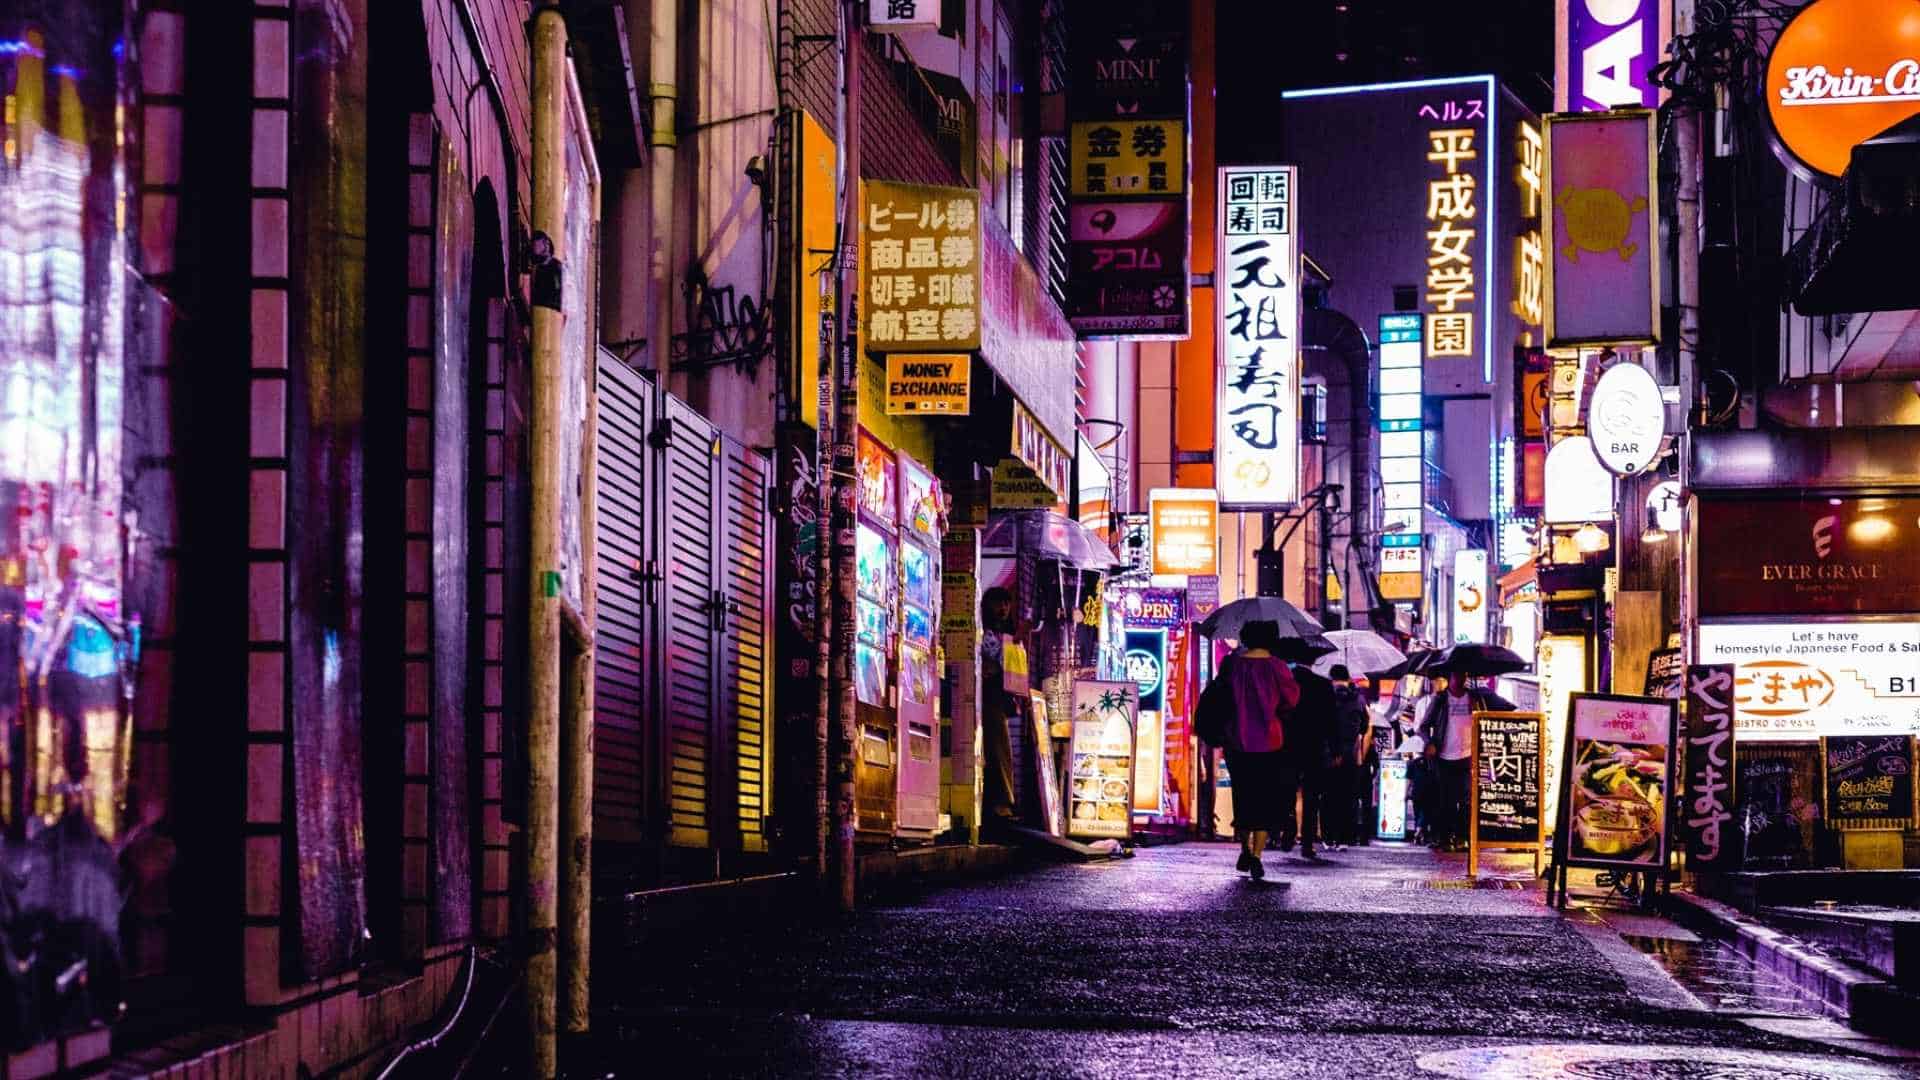 Get around Tokyo nightlife with the FLIP Guide App